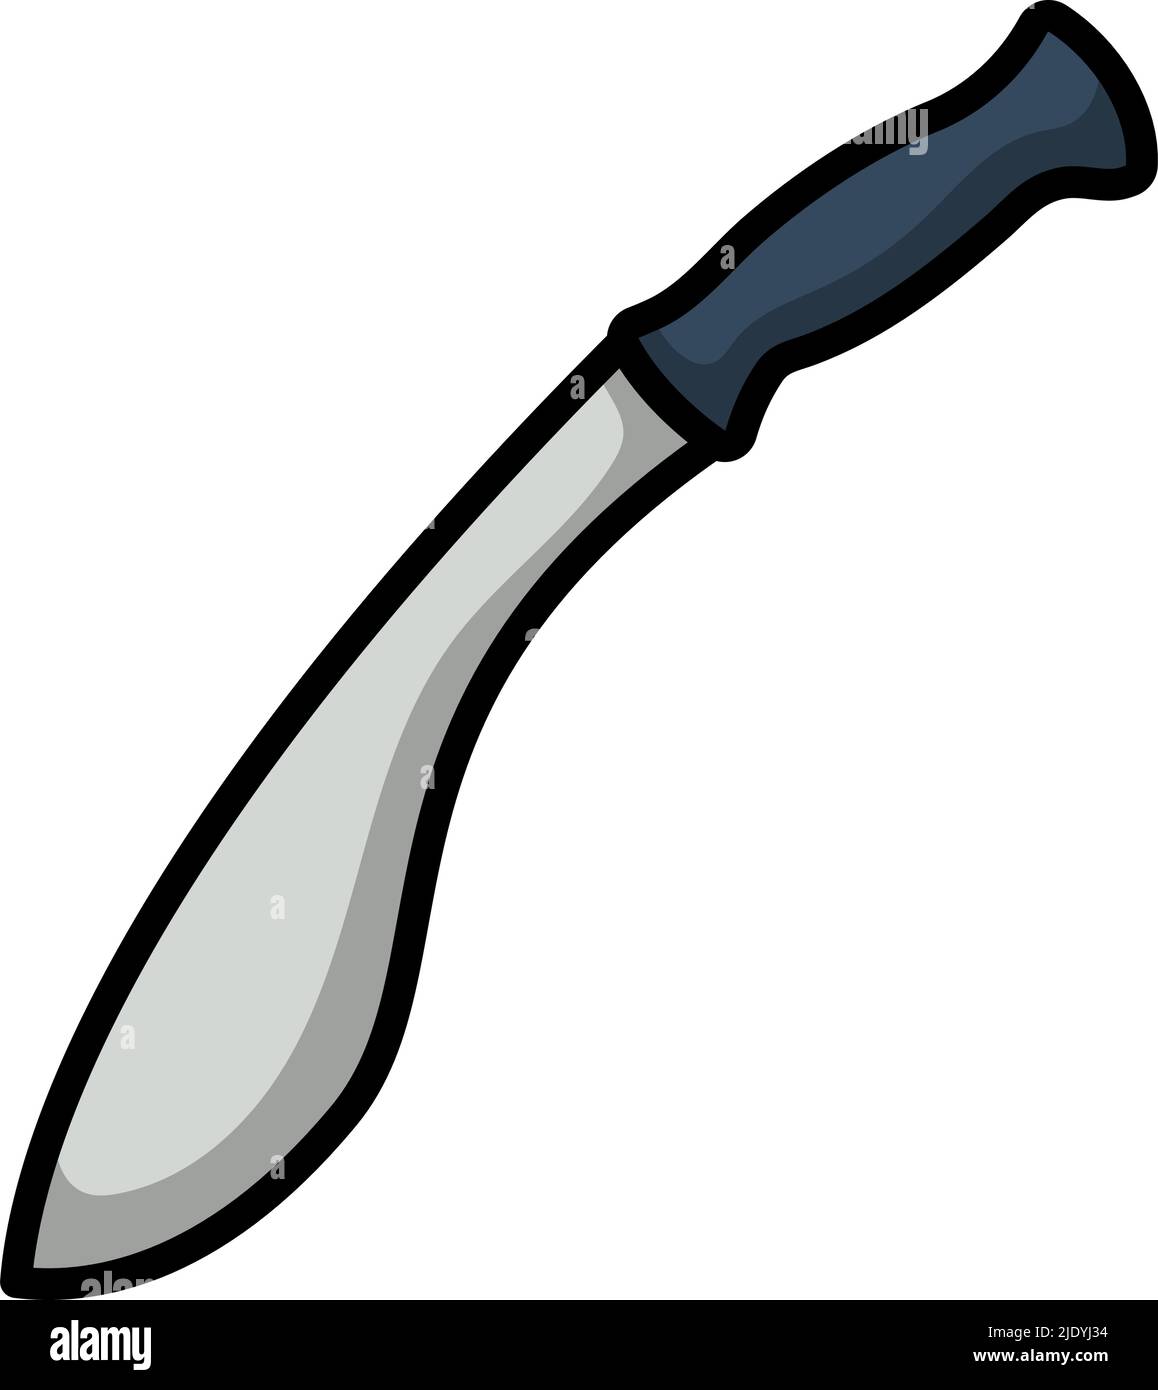 GENERICO cuchillo machete Espada Ninja Hóng Mógu 74 Cm AL86